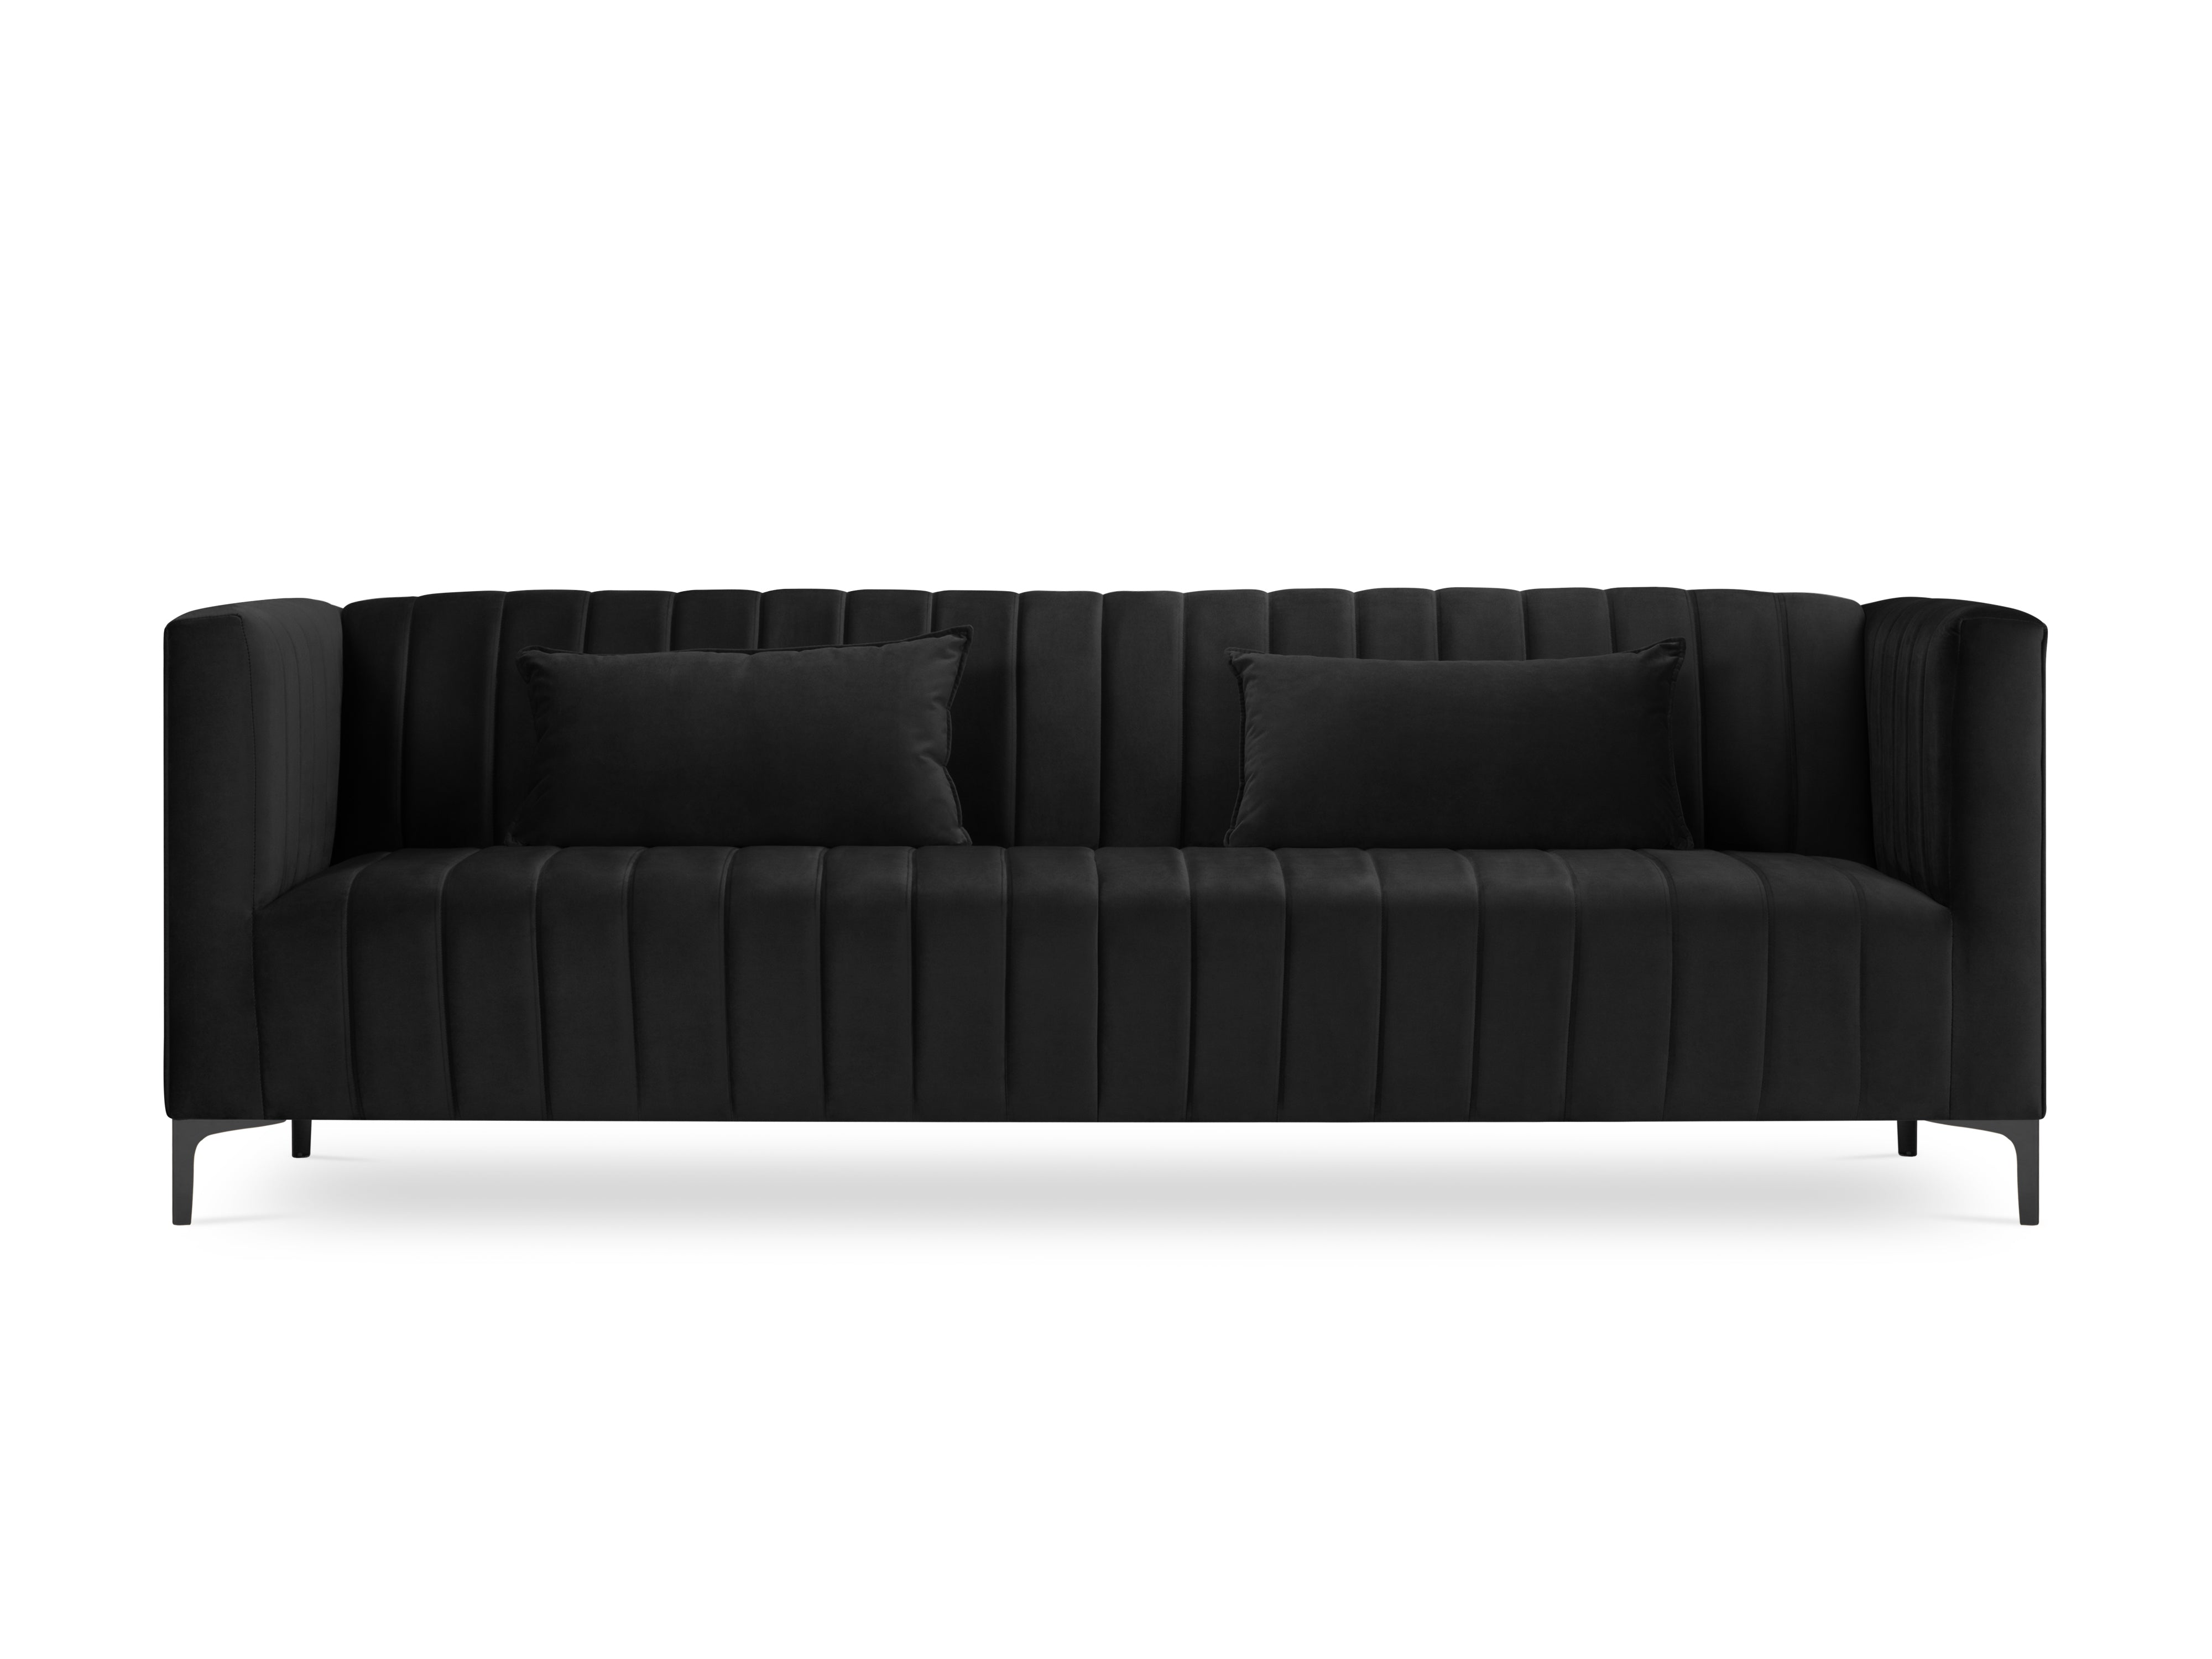 Velvet black sofa with stitching